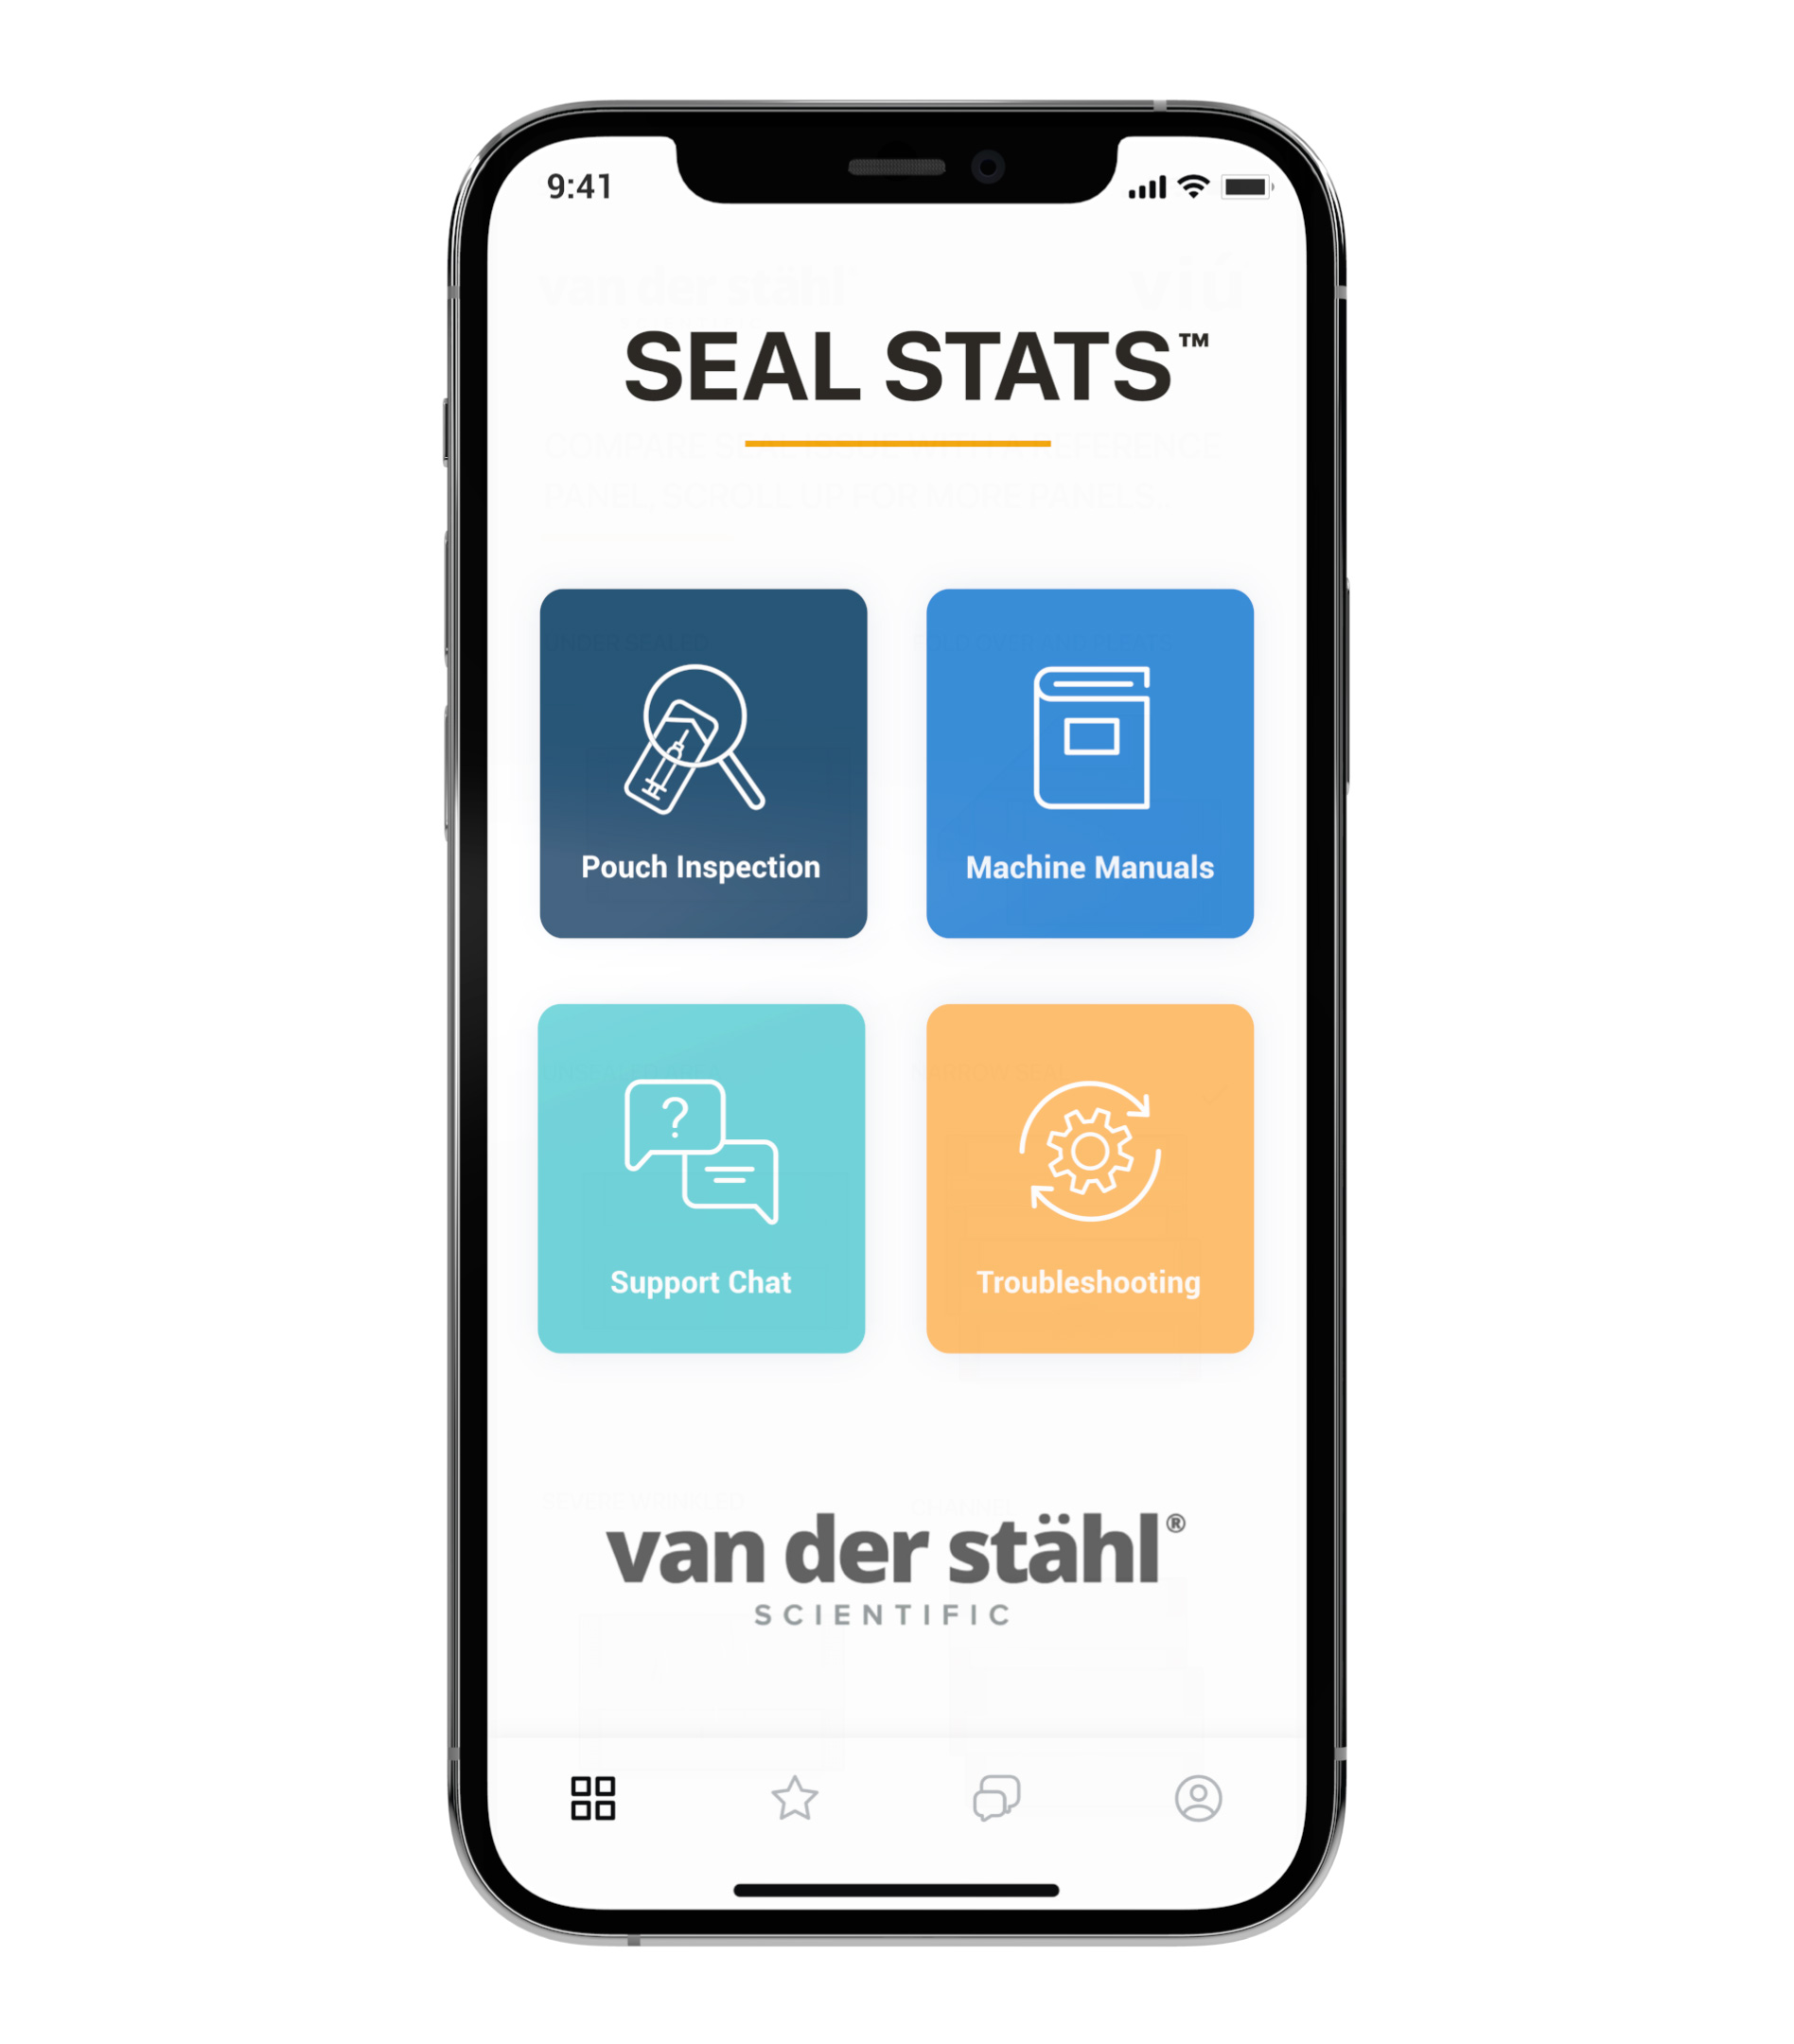 seal stats app home screen